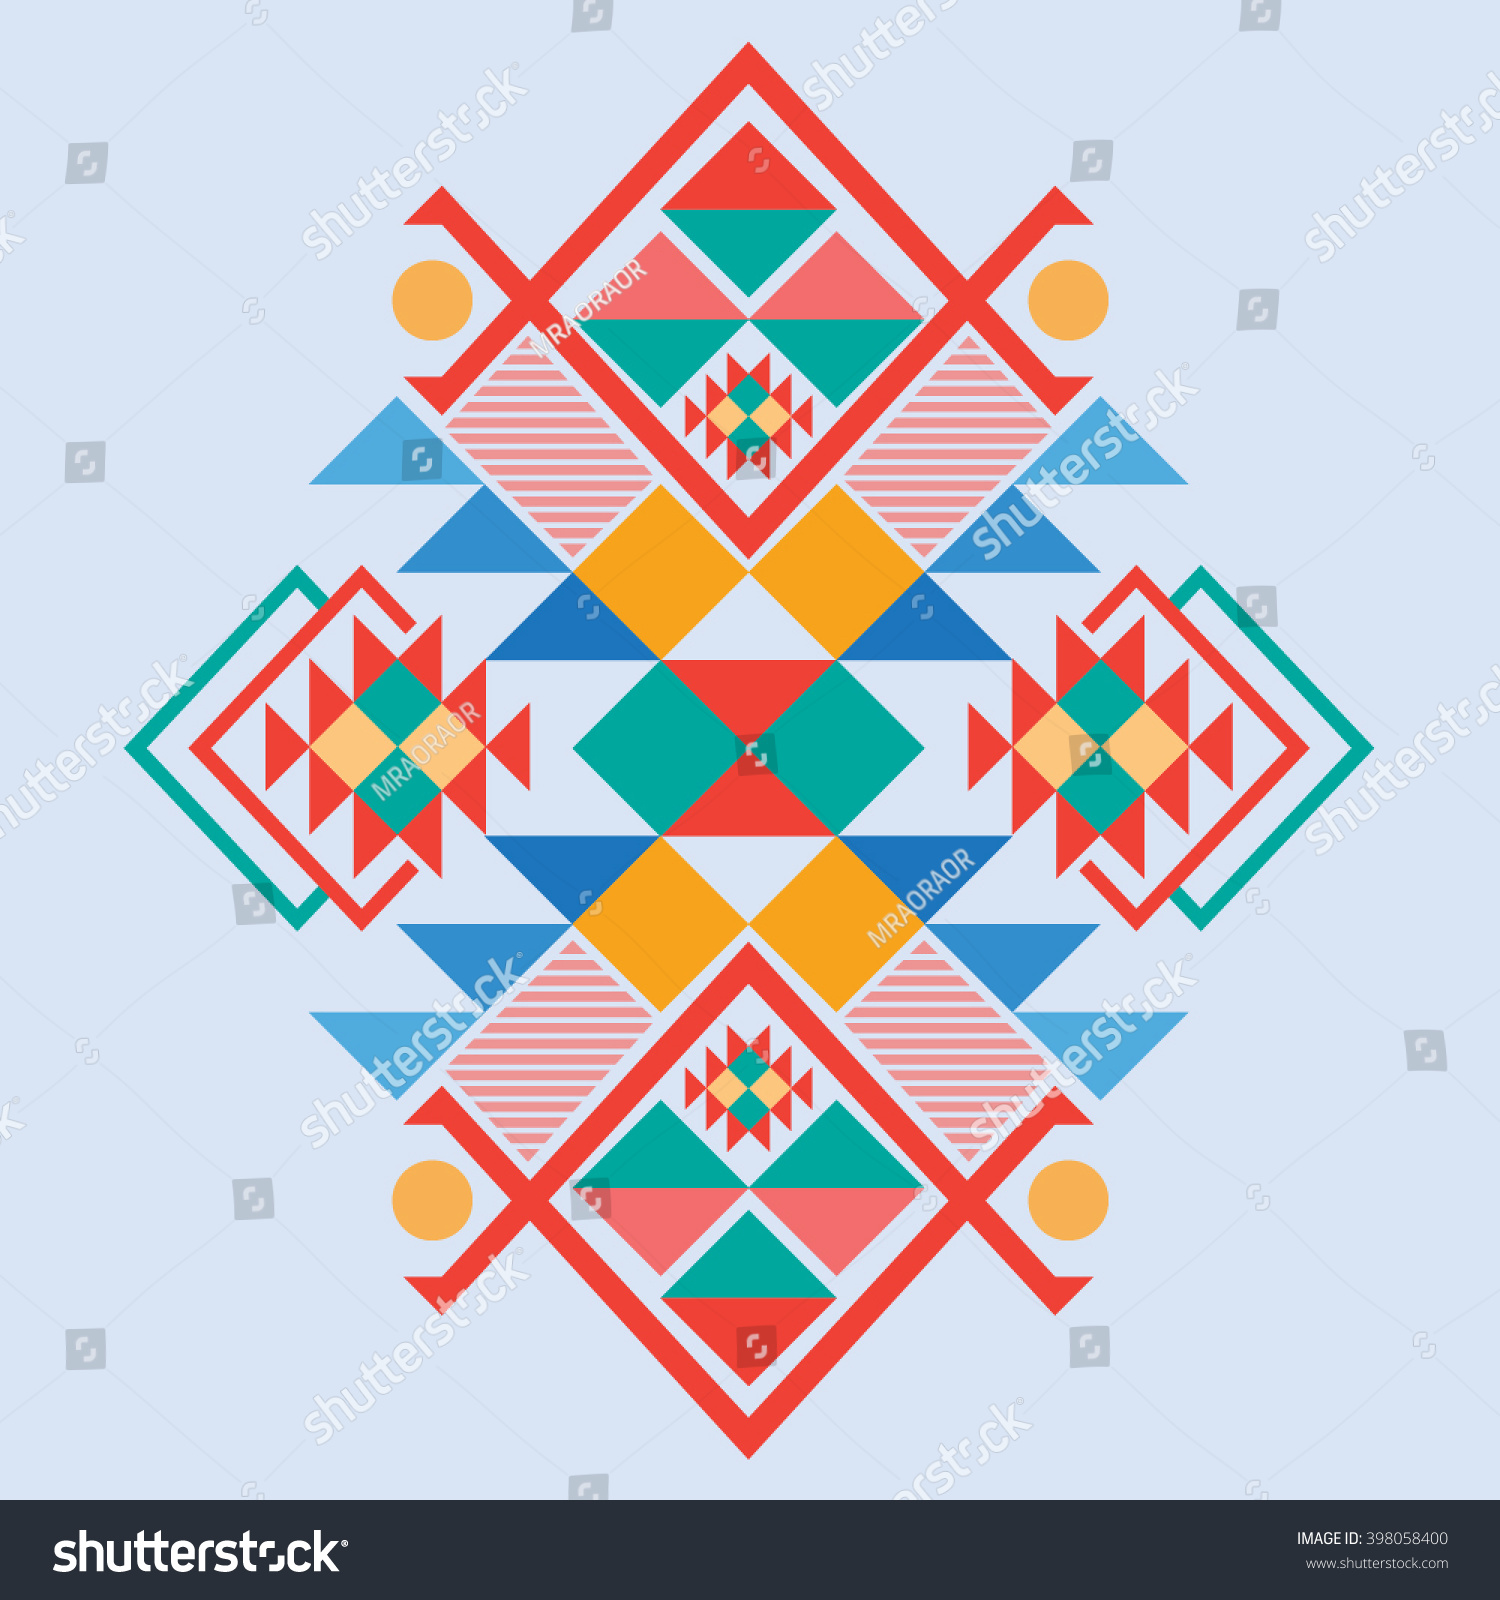 Vector Aztec stile tribal elements, ethnic design mix geometric textile with light blue color background #398058400